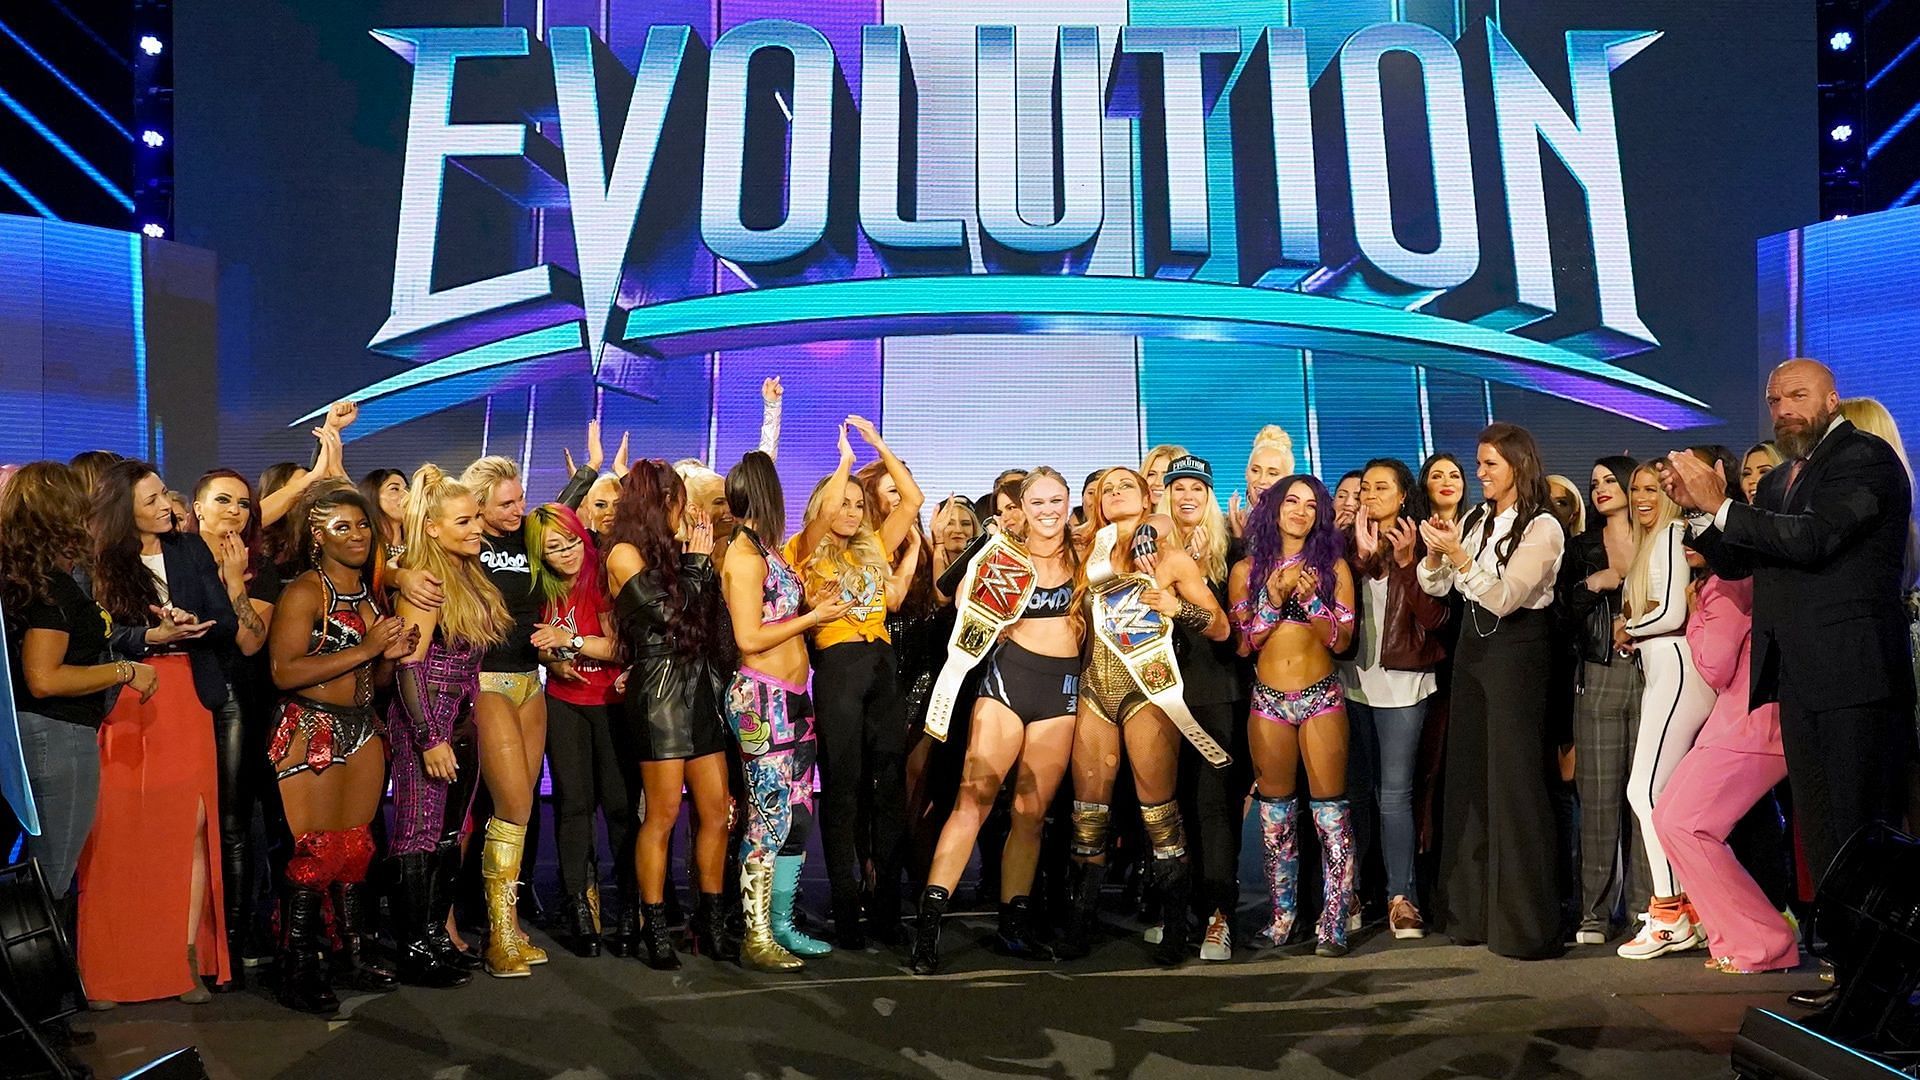 WWE has done an all-women